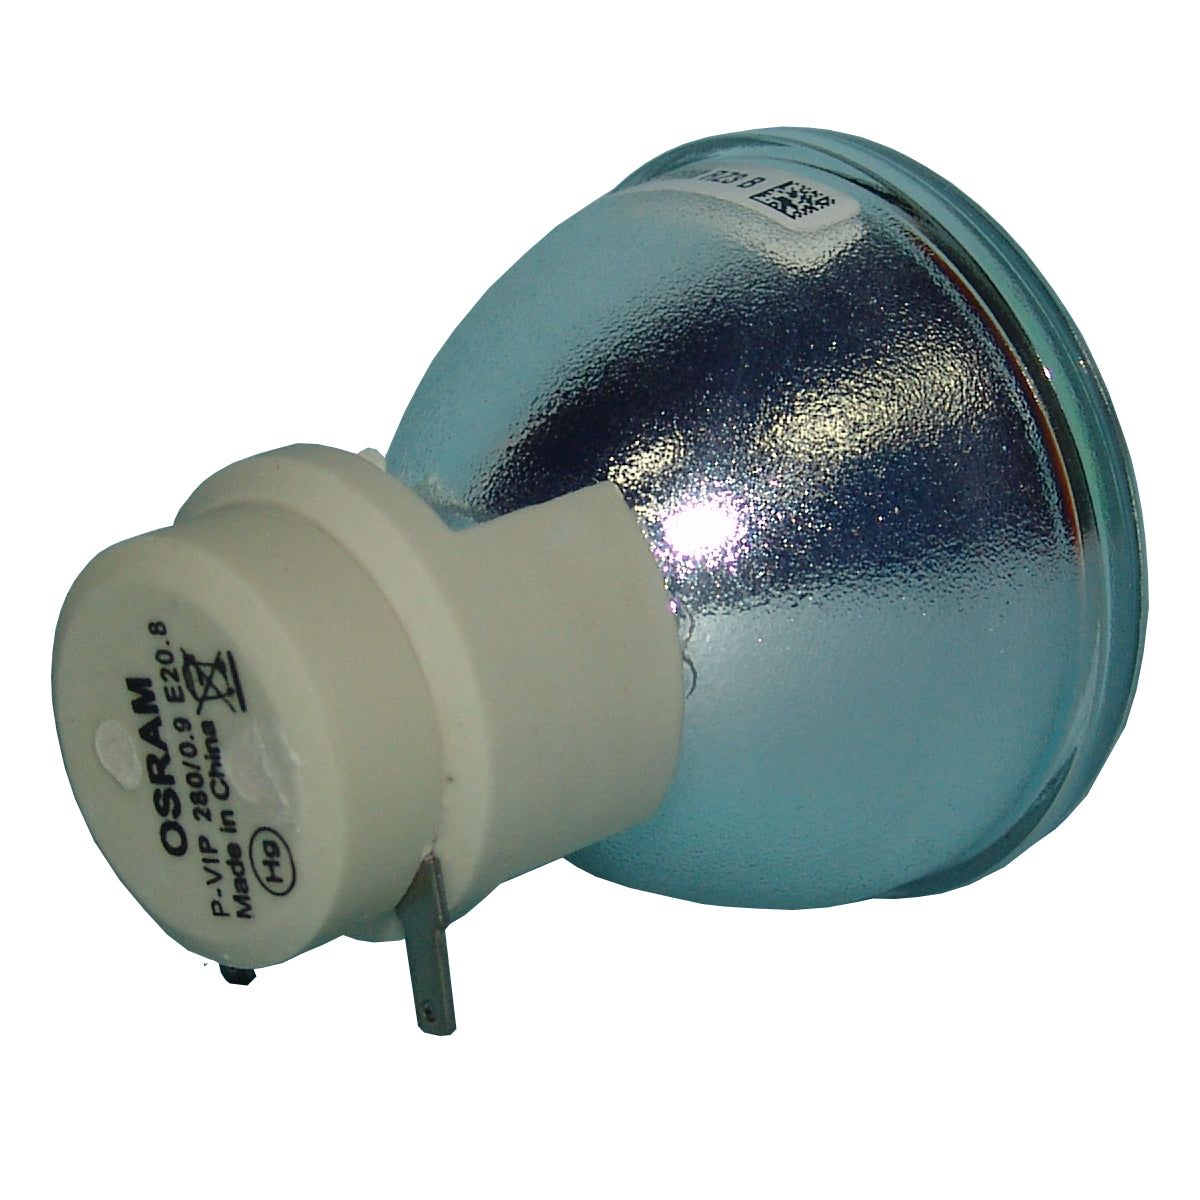 Viewsonic RLC-086 Osram Projector Bare Lamp